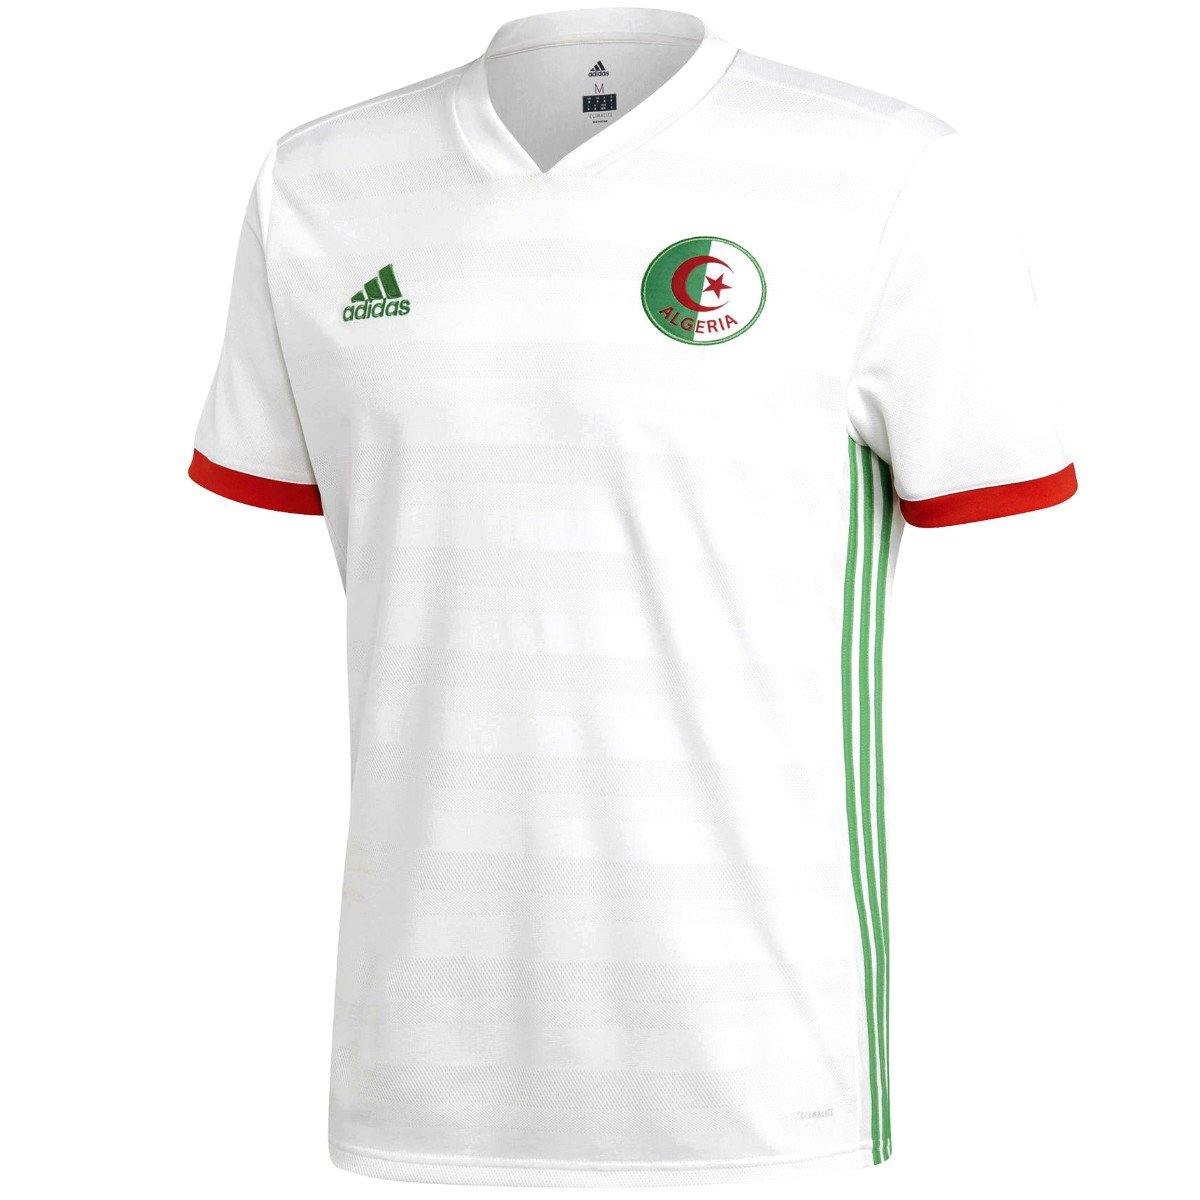 Algeria national team Home soccer jersey 2018/19 - Adidas ...